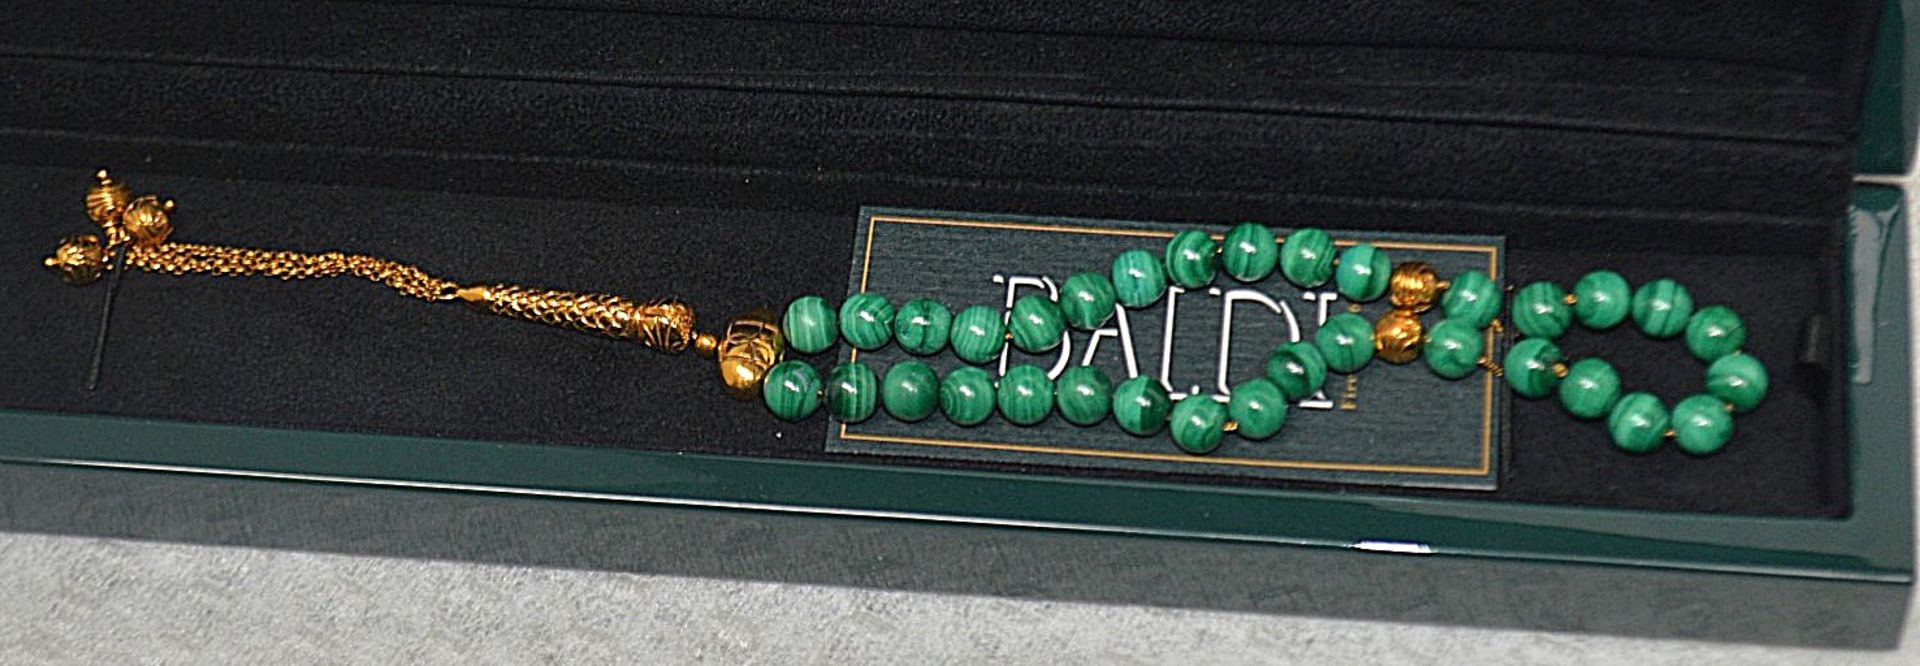 1 x BALDI 'Home Jewels' Italian Hand-crafted Artisan MISBAHA Prayer Beads In Green Malachite And - Image 4 of 5